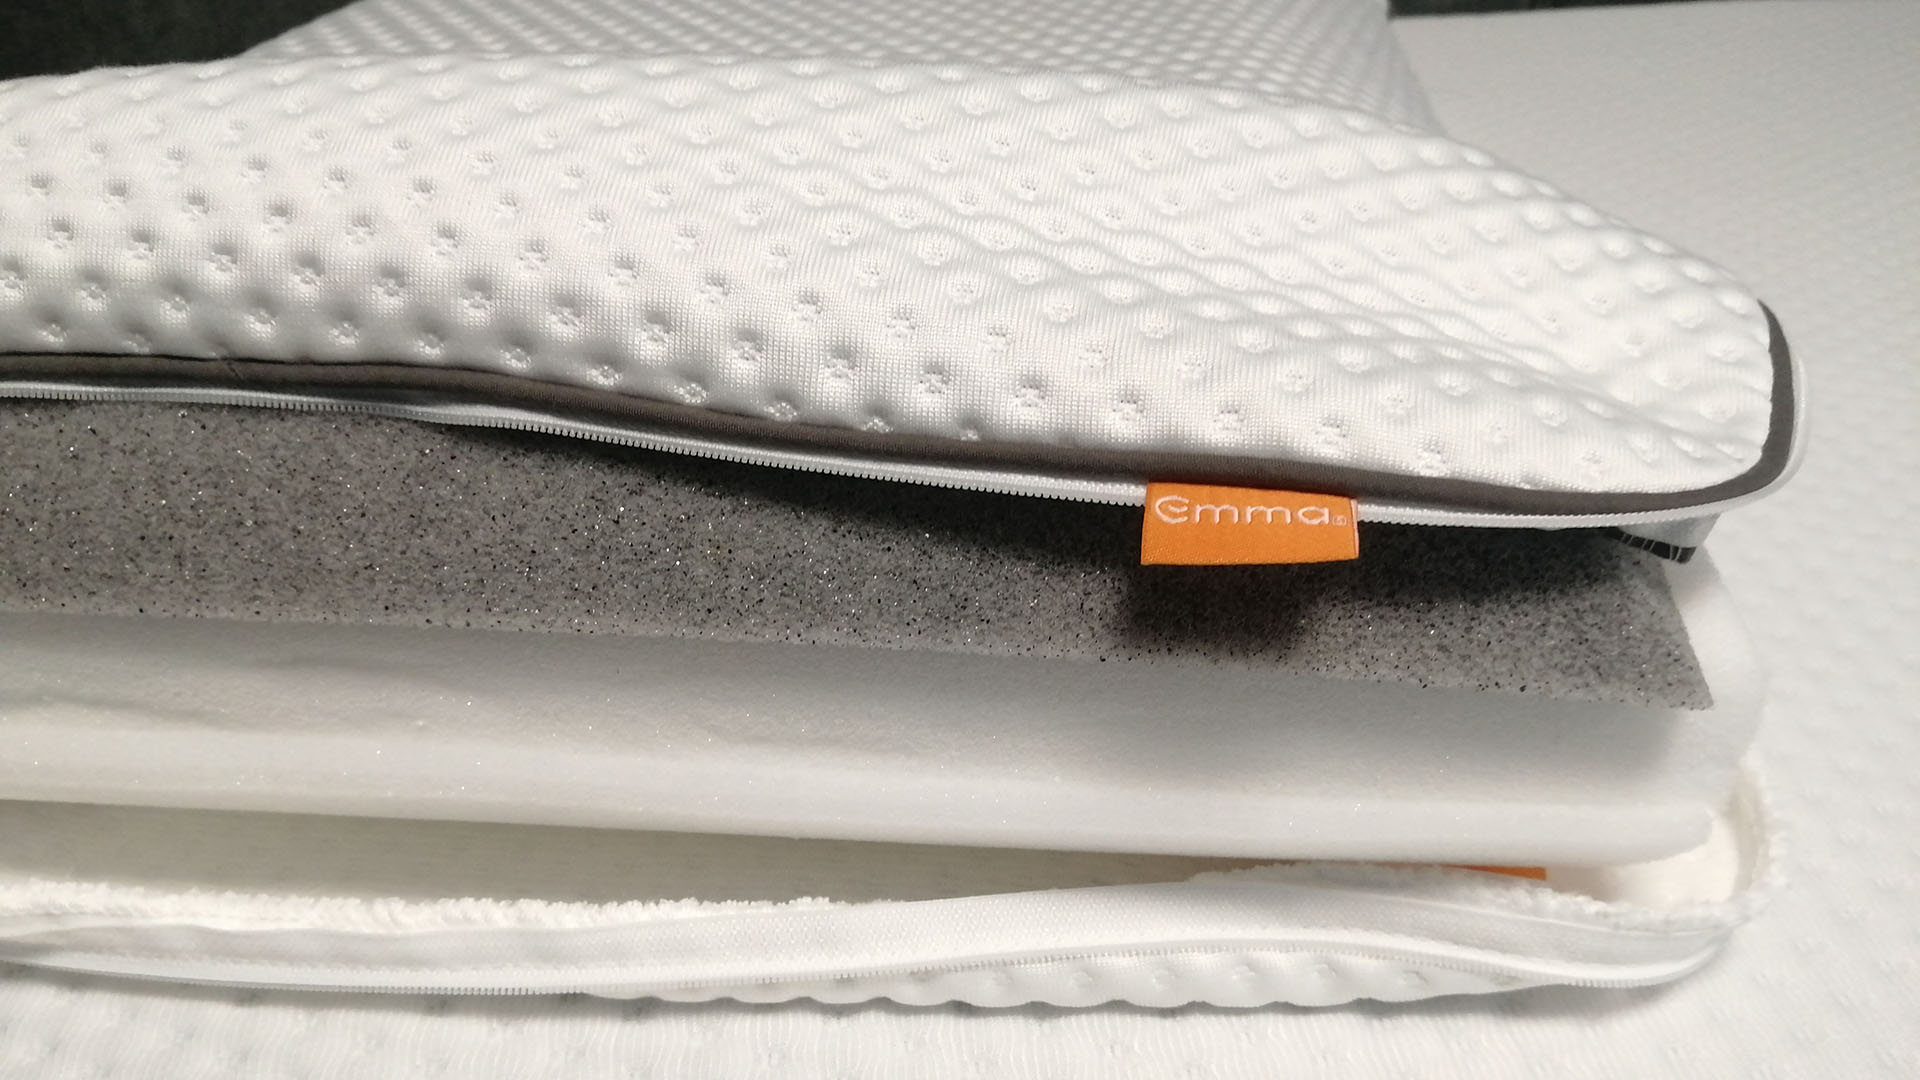 Emma Premium Pillow unzipped to show foam layers inside